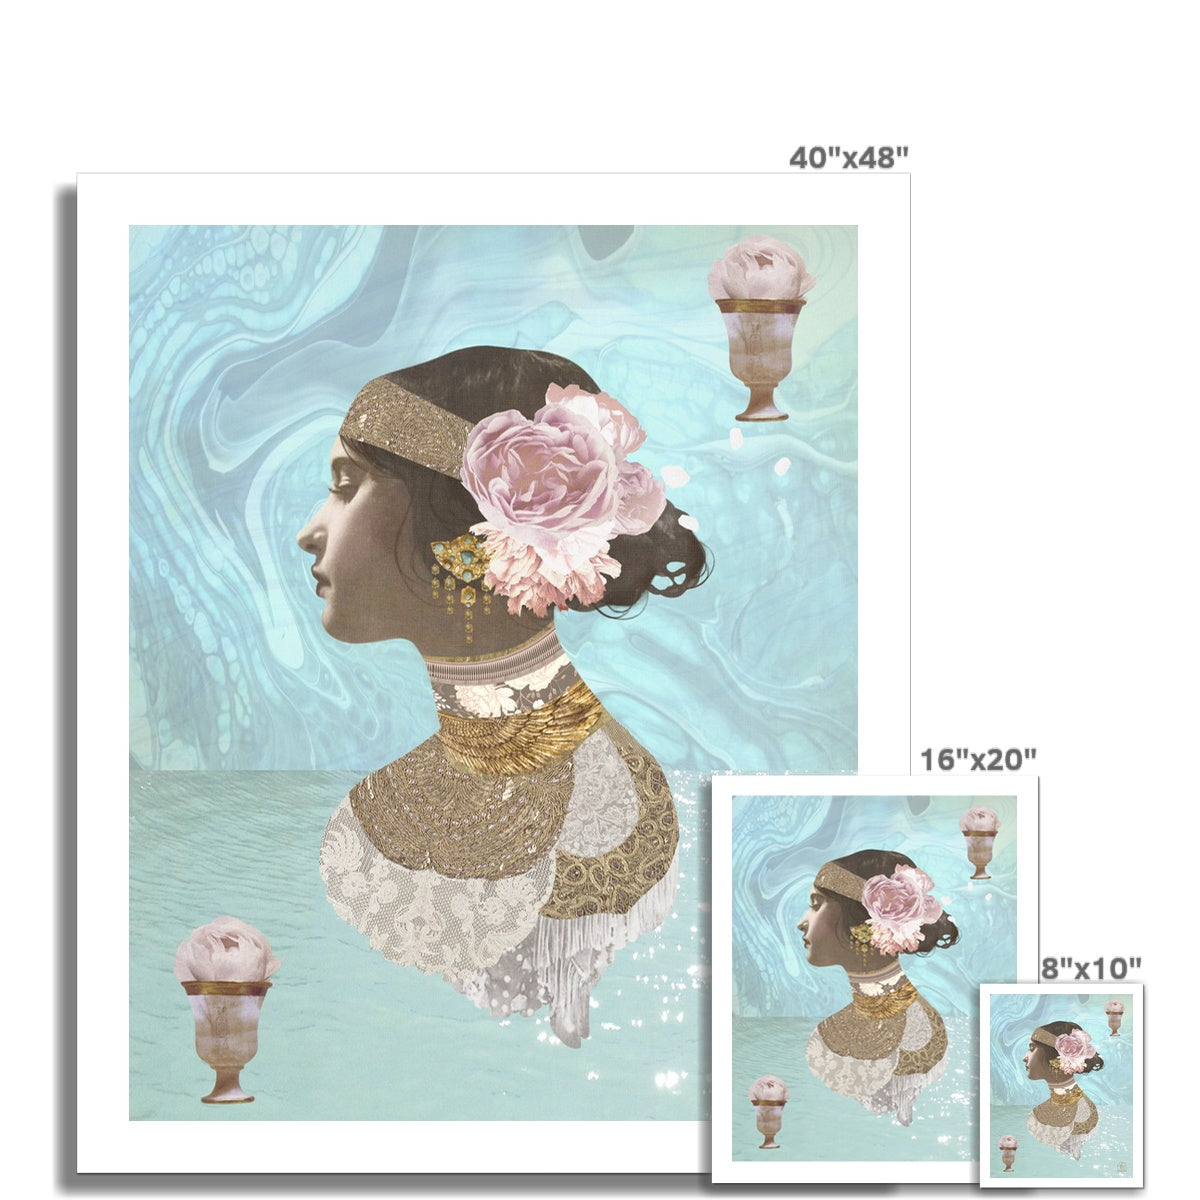 Queen of Cups Fine Art Print - Starseed Designs Inc.